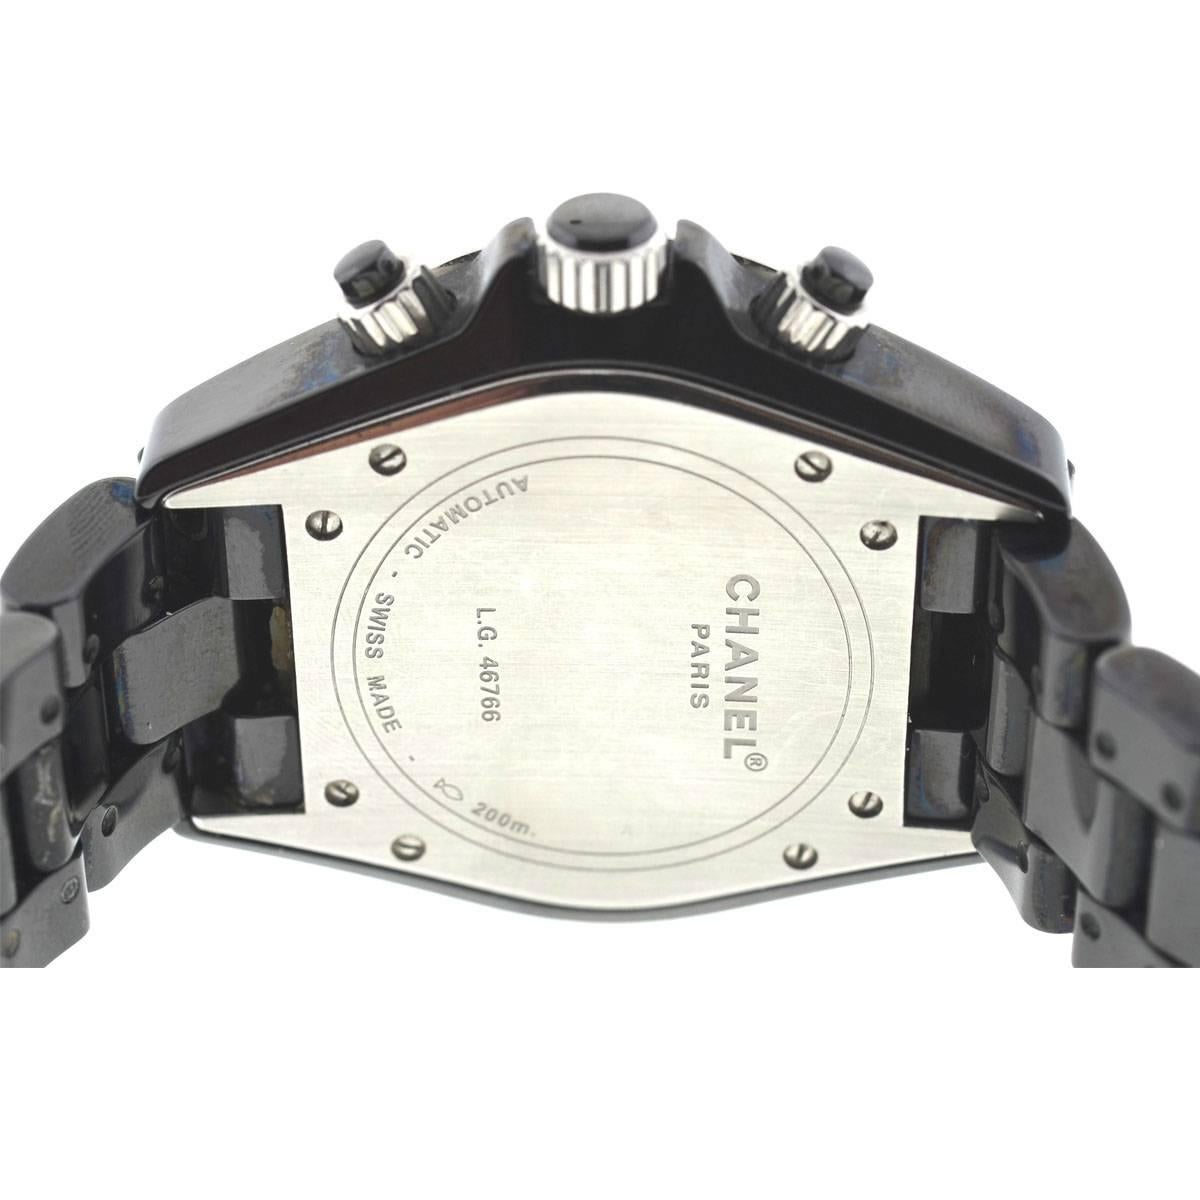 Chanel Black Ceramic Diamond J12 Chronograph Automatic Wristwatch 5